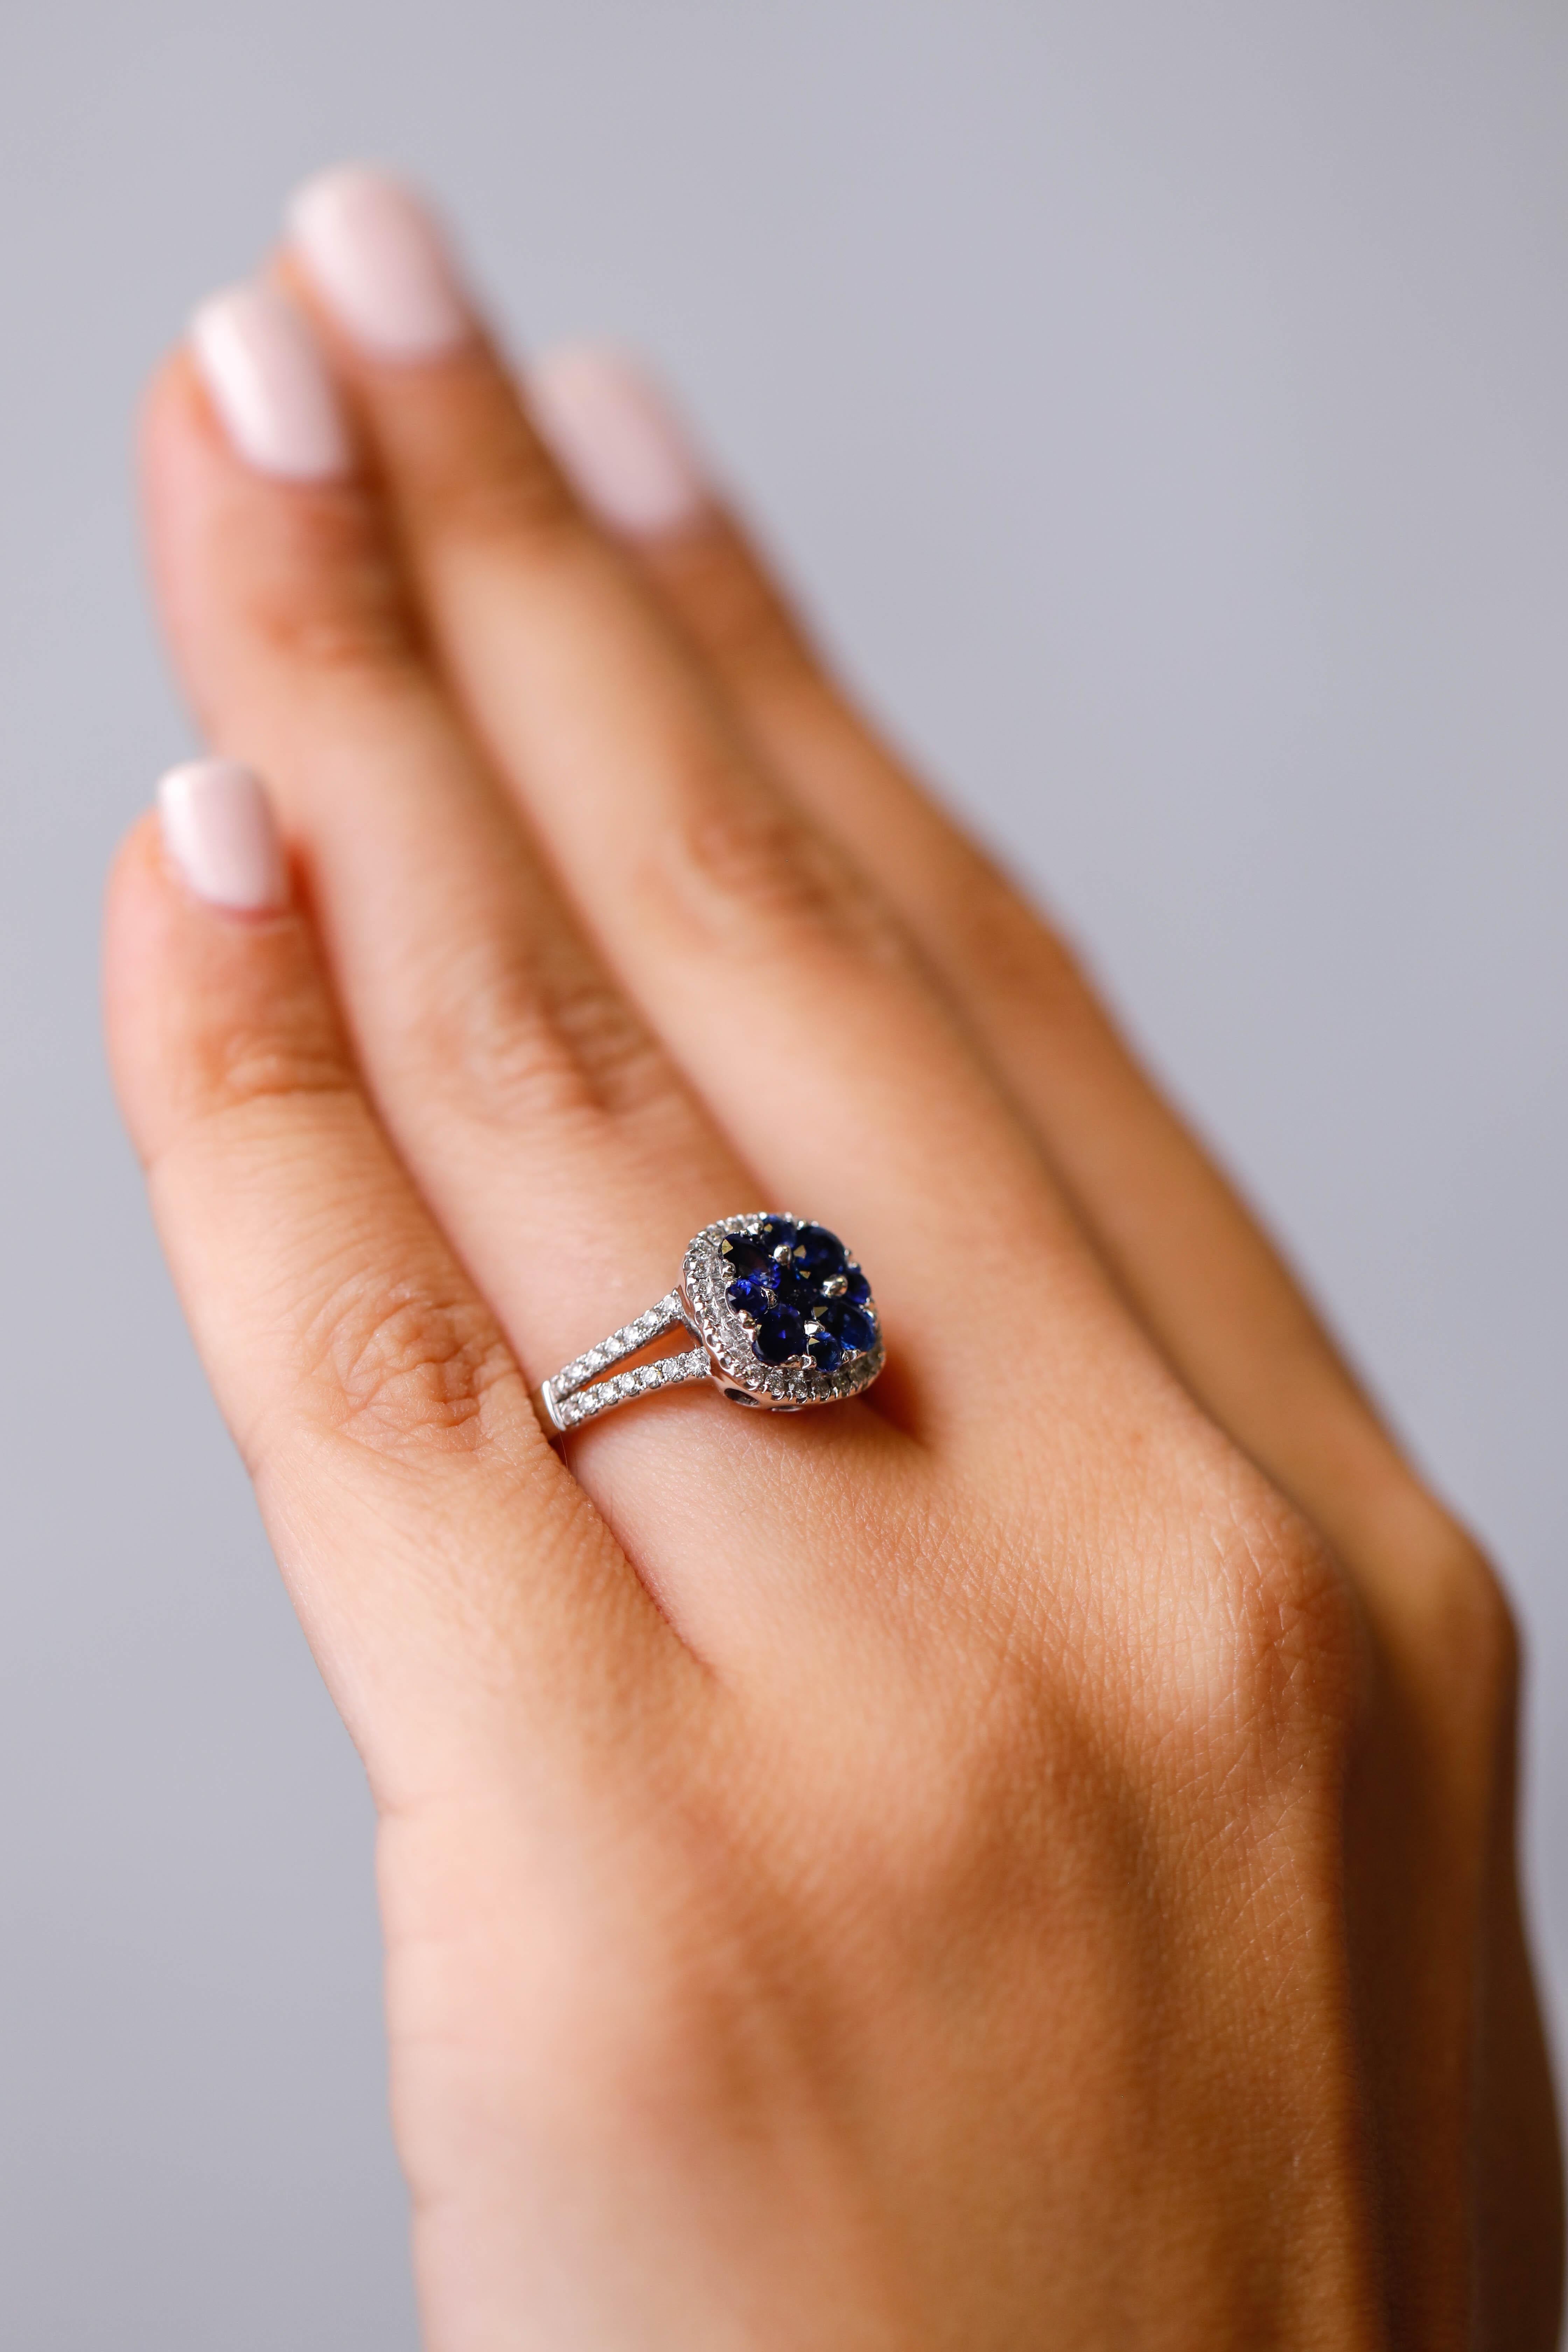 Oval Cut 1.26 Carat Blue Sapphire Diamond Engagement Ring 18 Karat White Gold For Sale 1